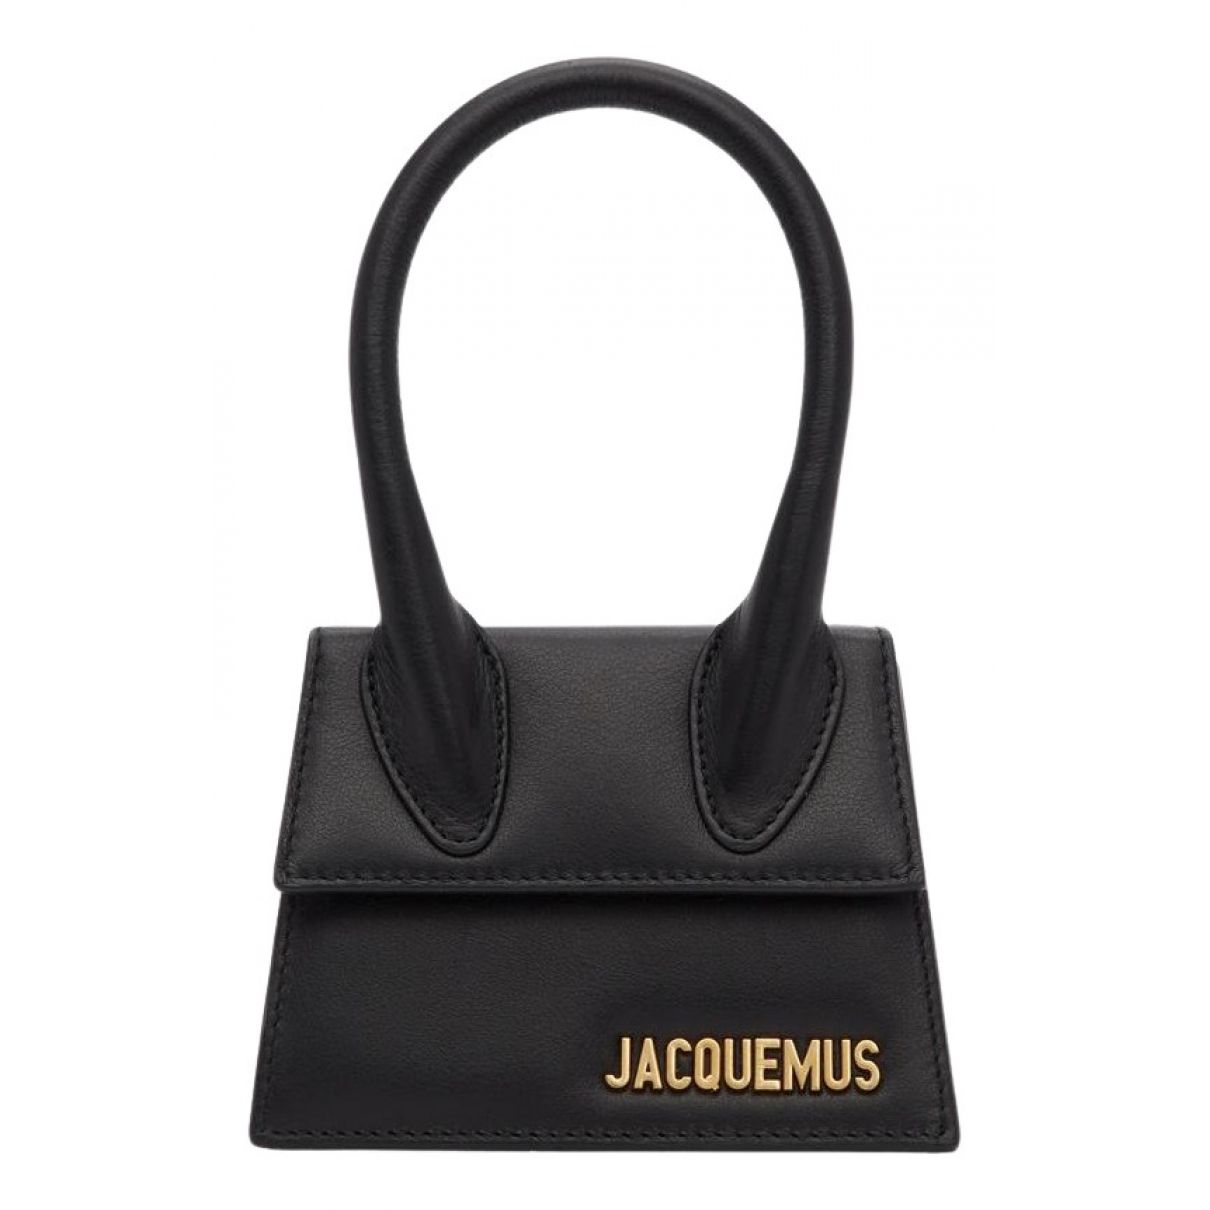 Jacquemus black Leather Handbags | Vestiaire Collective (Global)